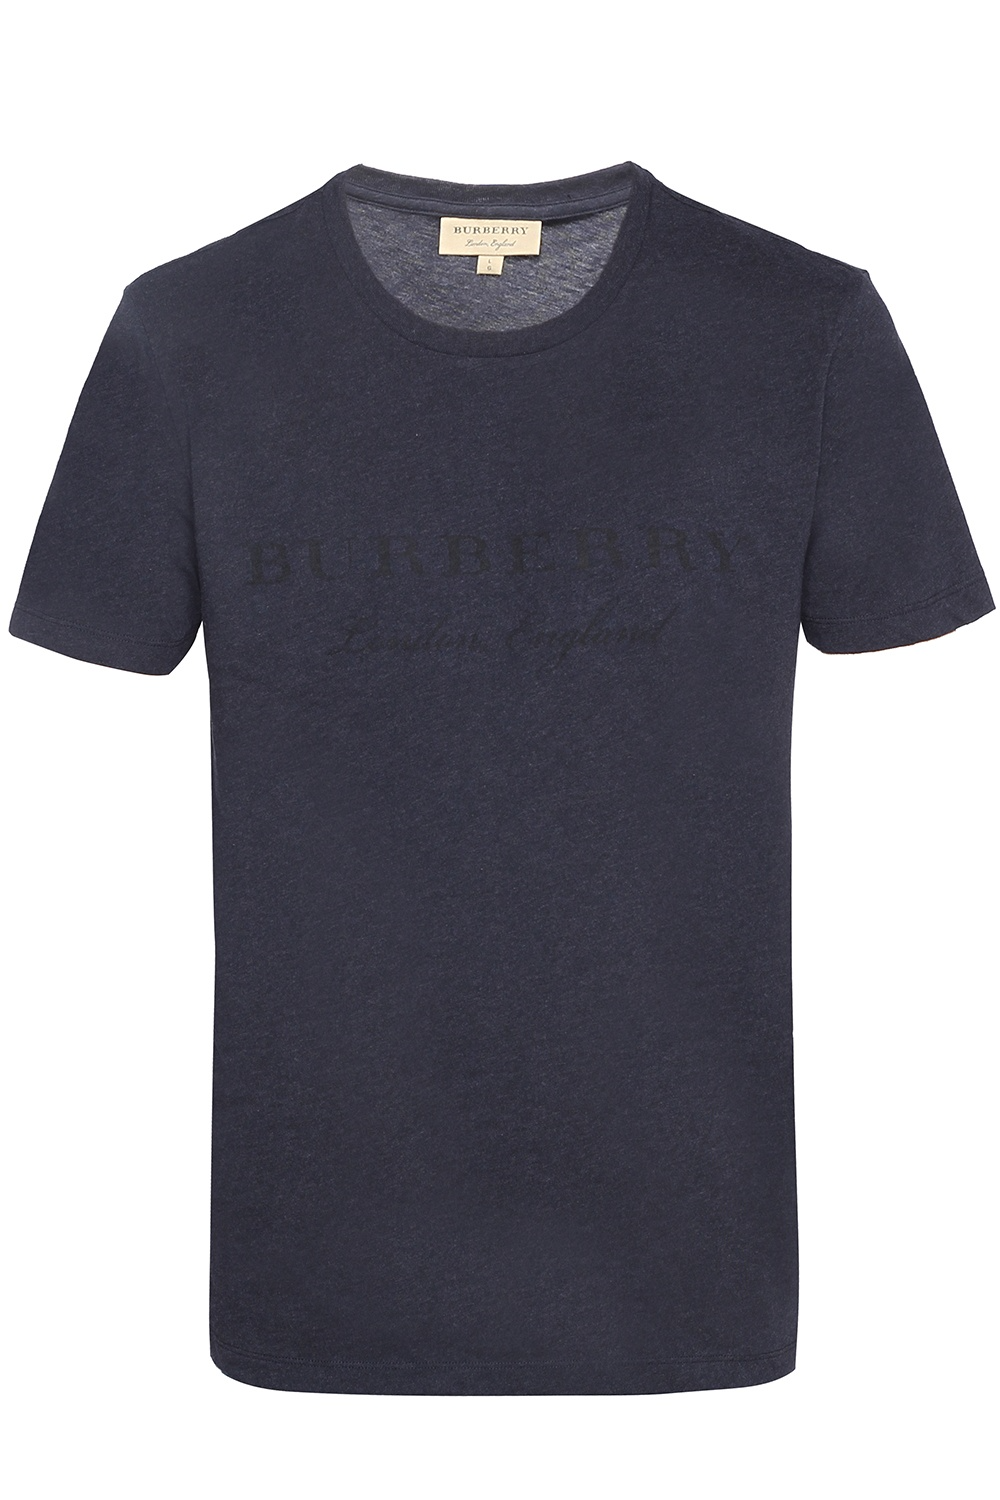 Burberry London T Shirt Blue